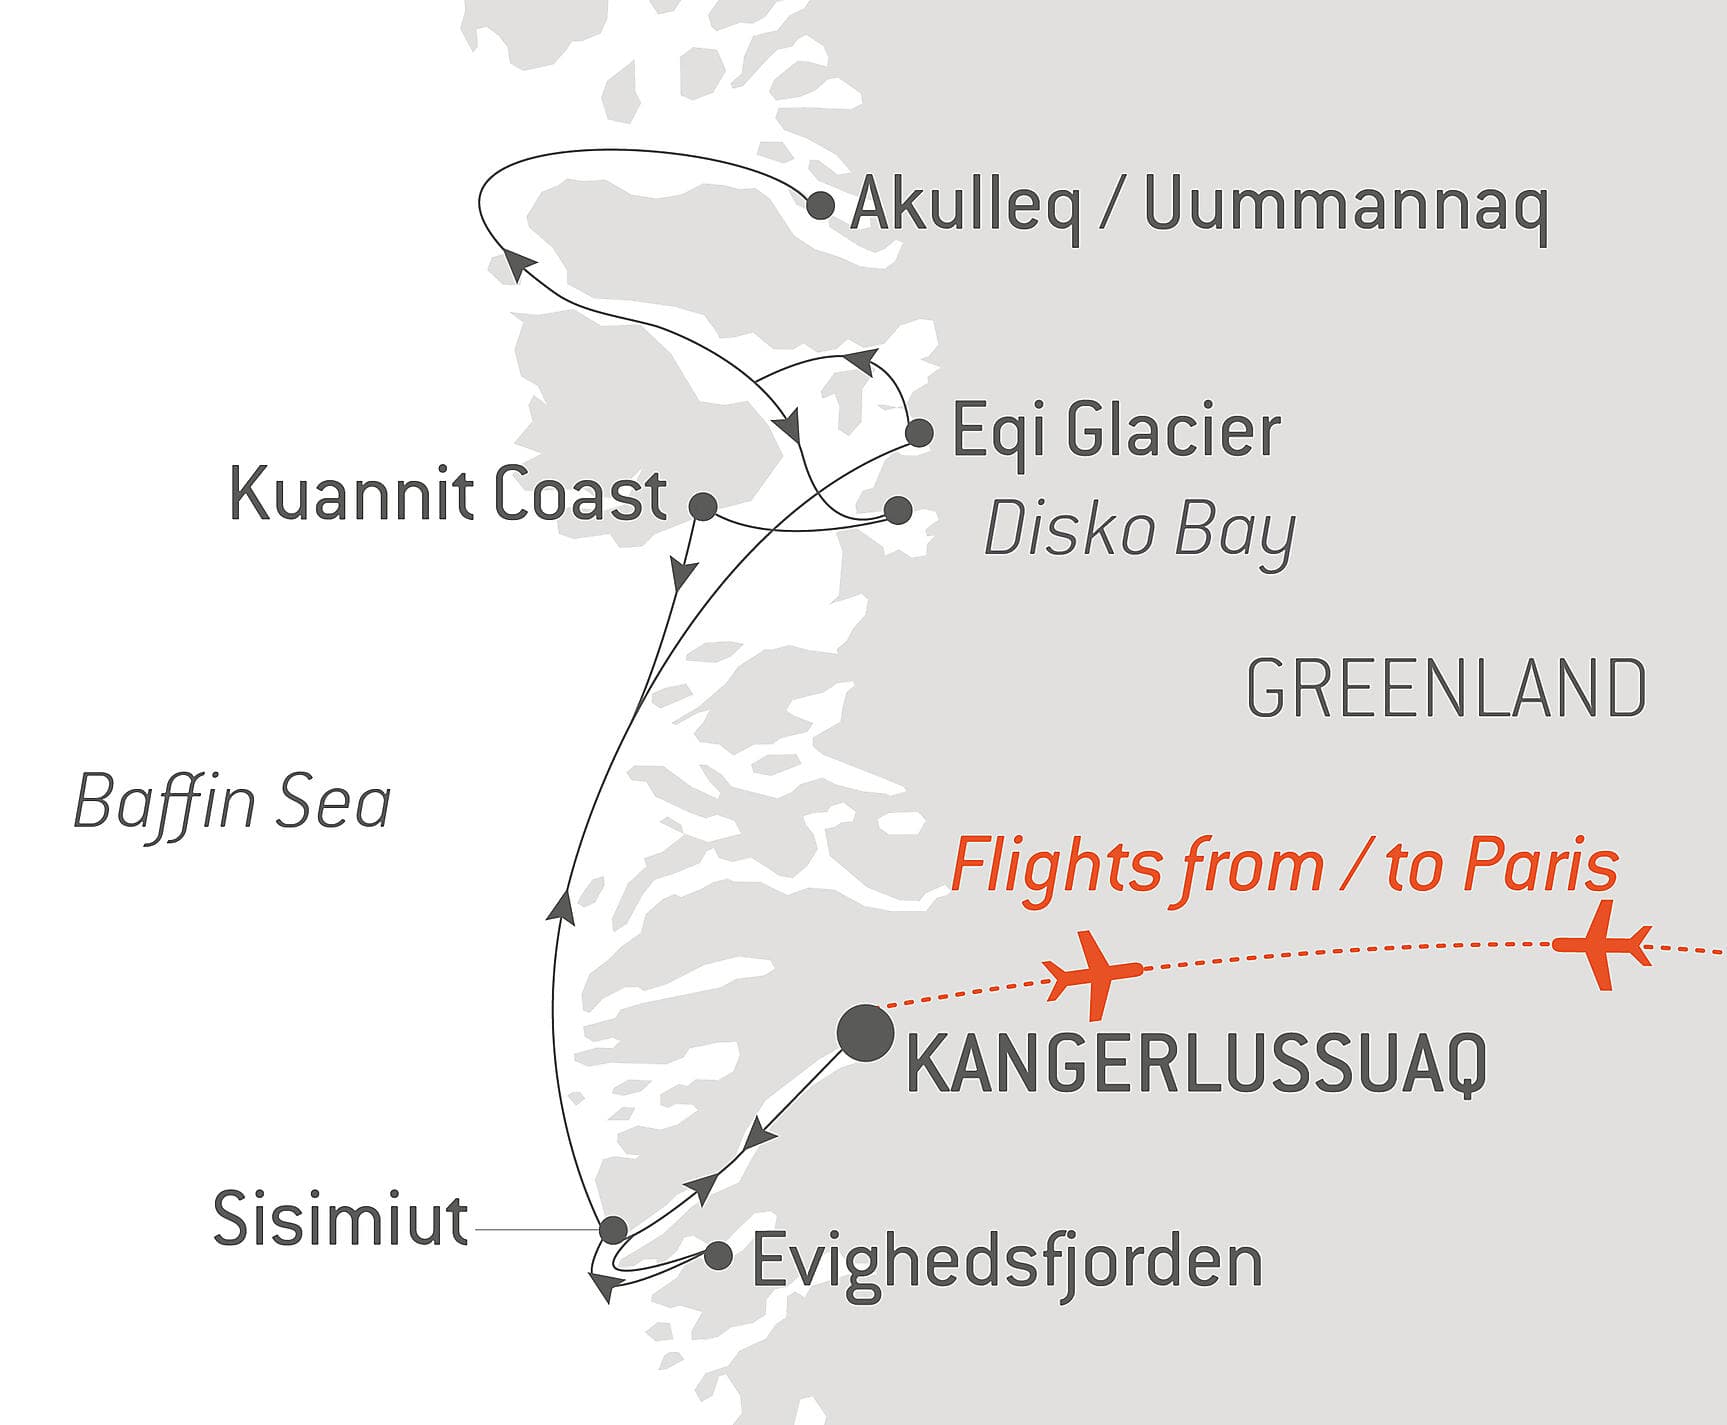 Disko Bay and Inuit villages